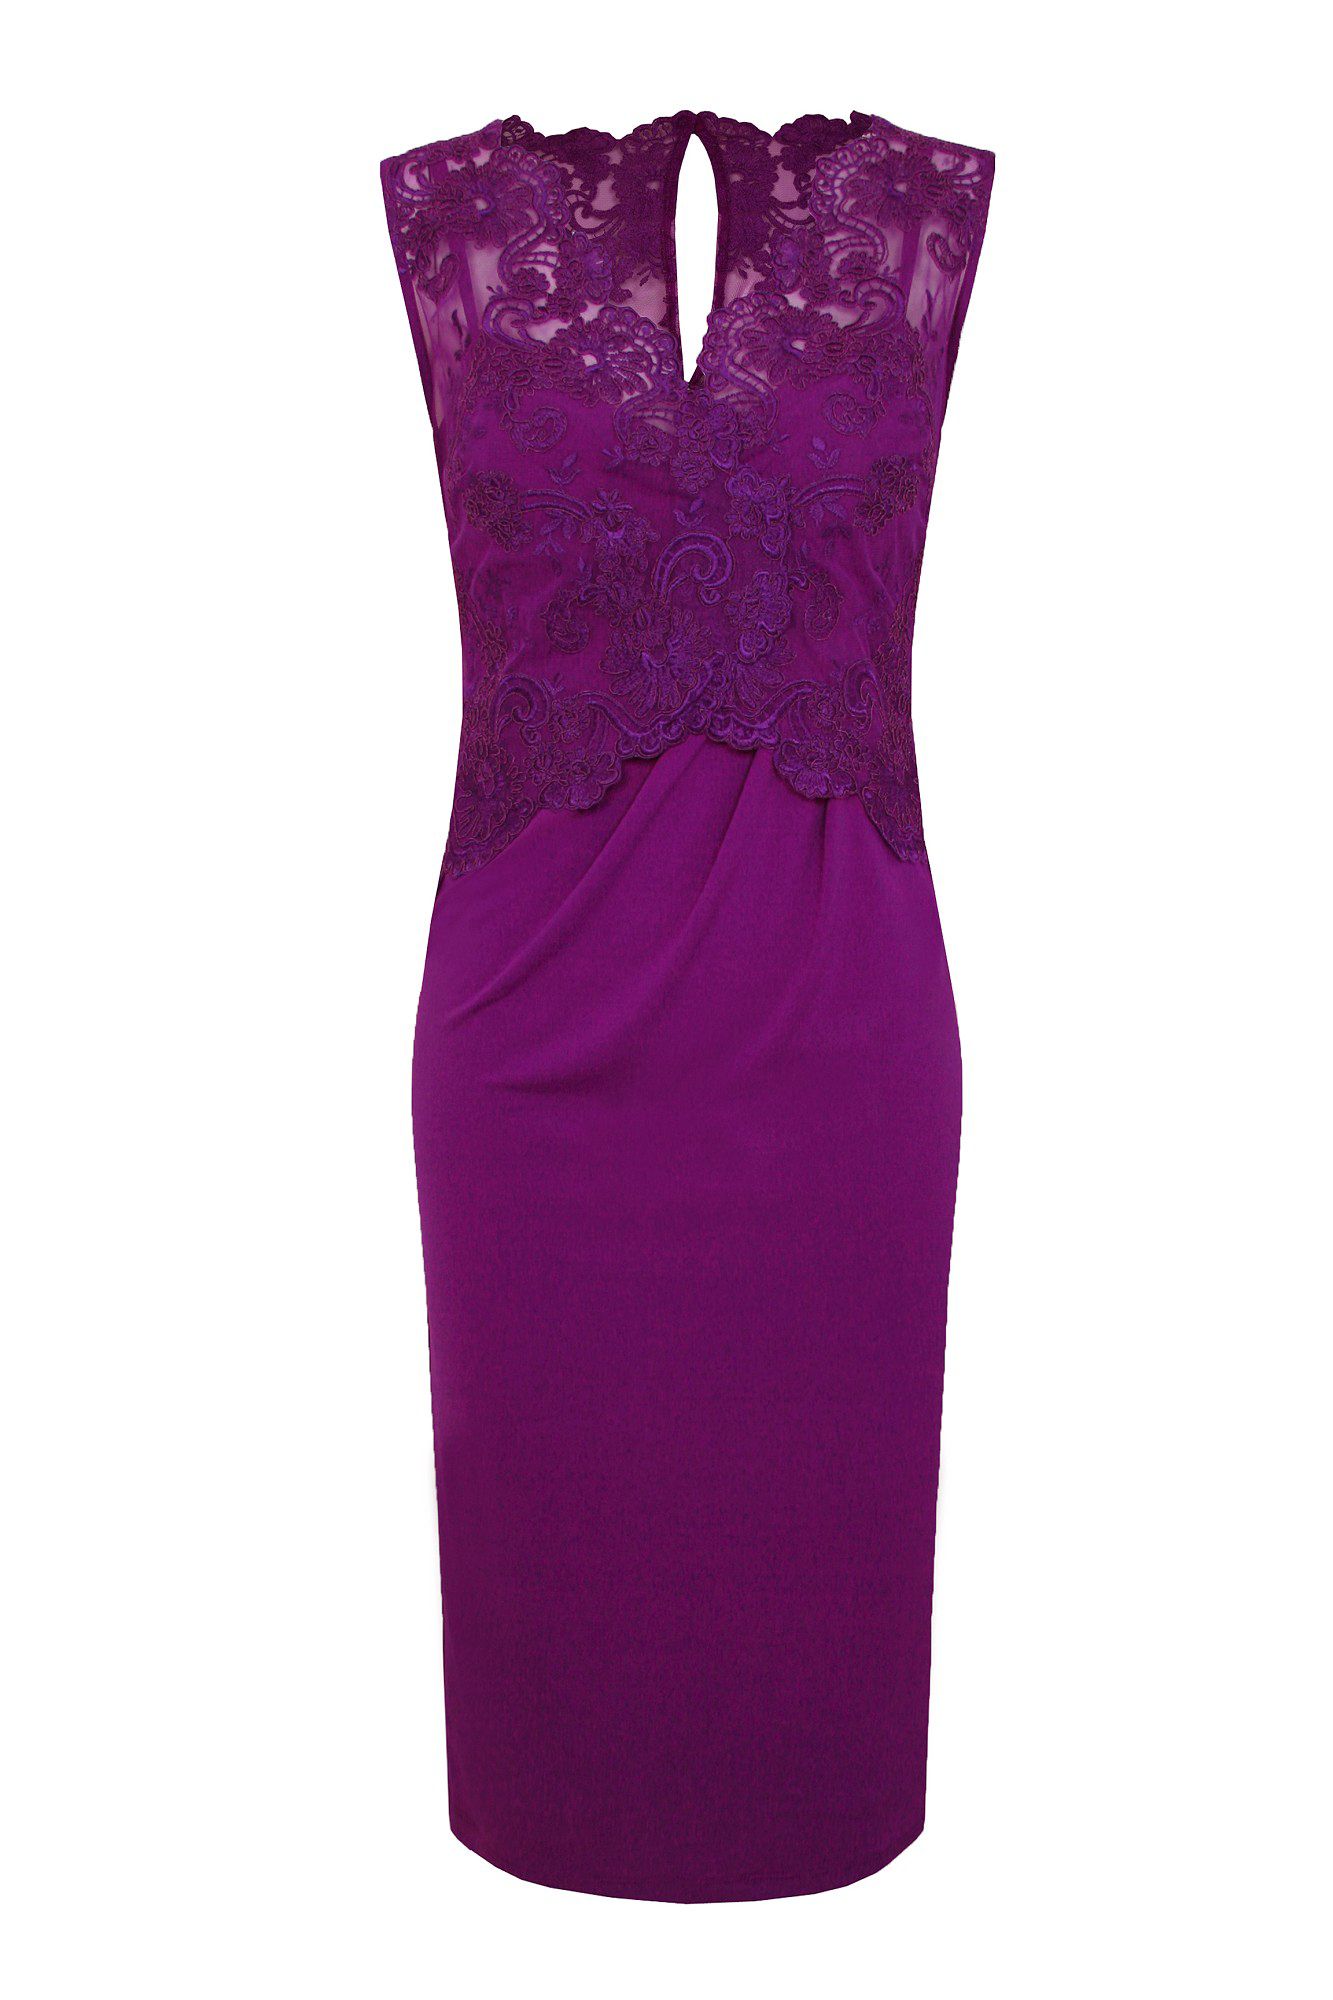 alexon-purple-lace-top-dress-product-1-11653714-066440723.jpeg